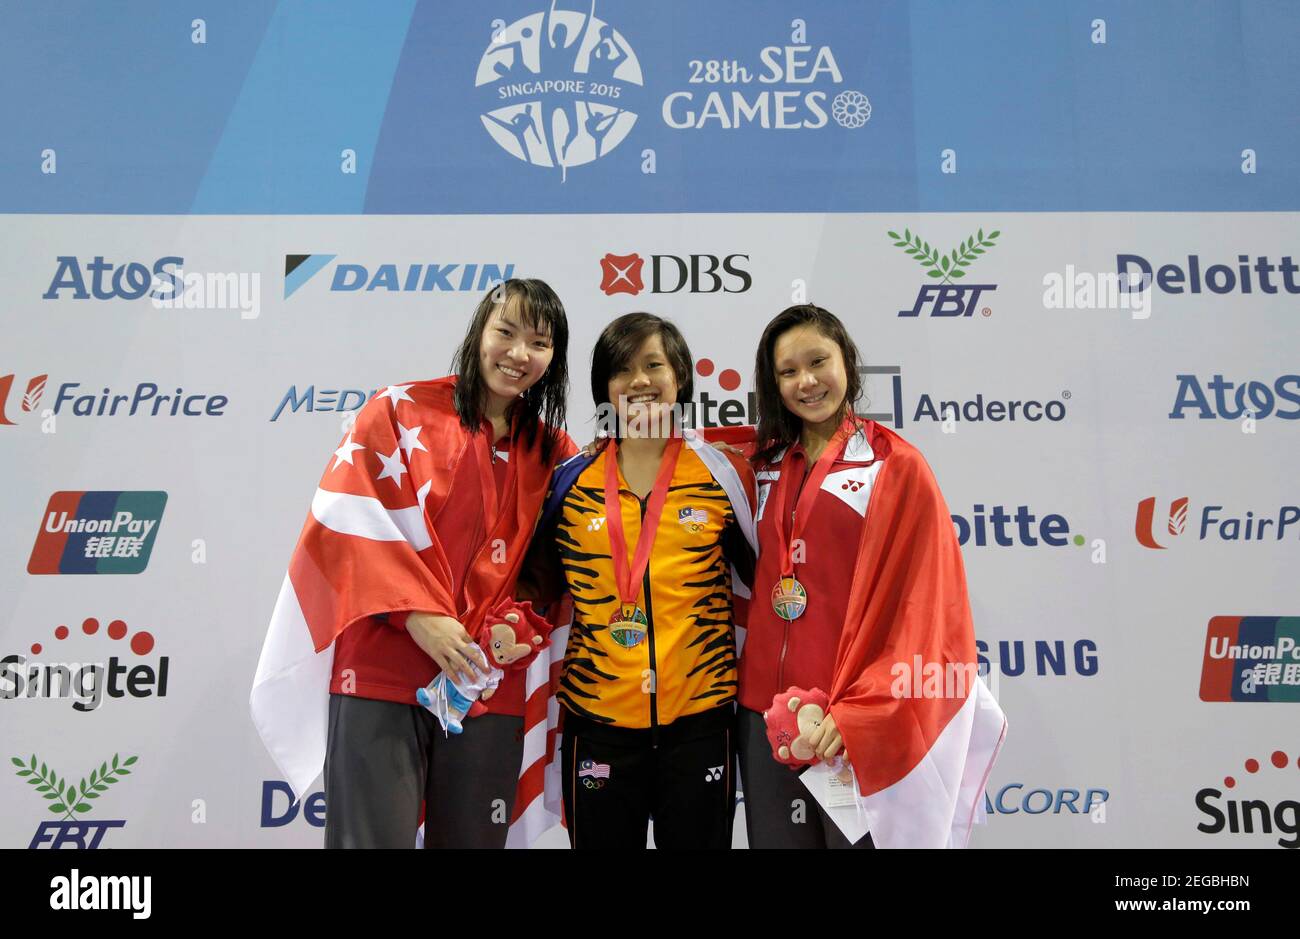 28th SEA Games Singapore 2015 - OCBC Aquatic Centre, Singapore - 8/6/15  Swimming - Women's 100m Breaststroke - Final - (L-R) Singapore's Ho Ru'En  Roanne, Malaysia's Phee Jinq En and Singapore's Samantha